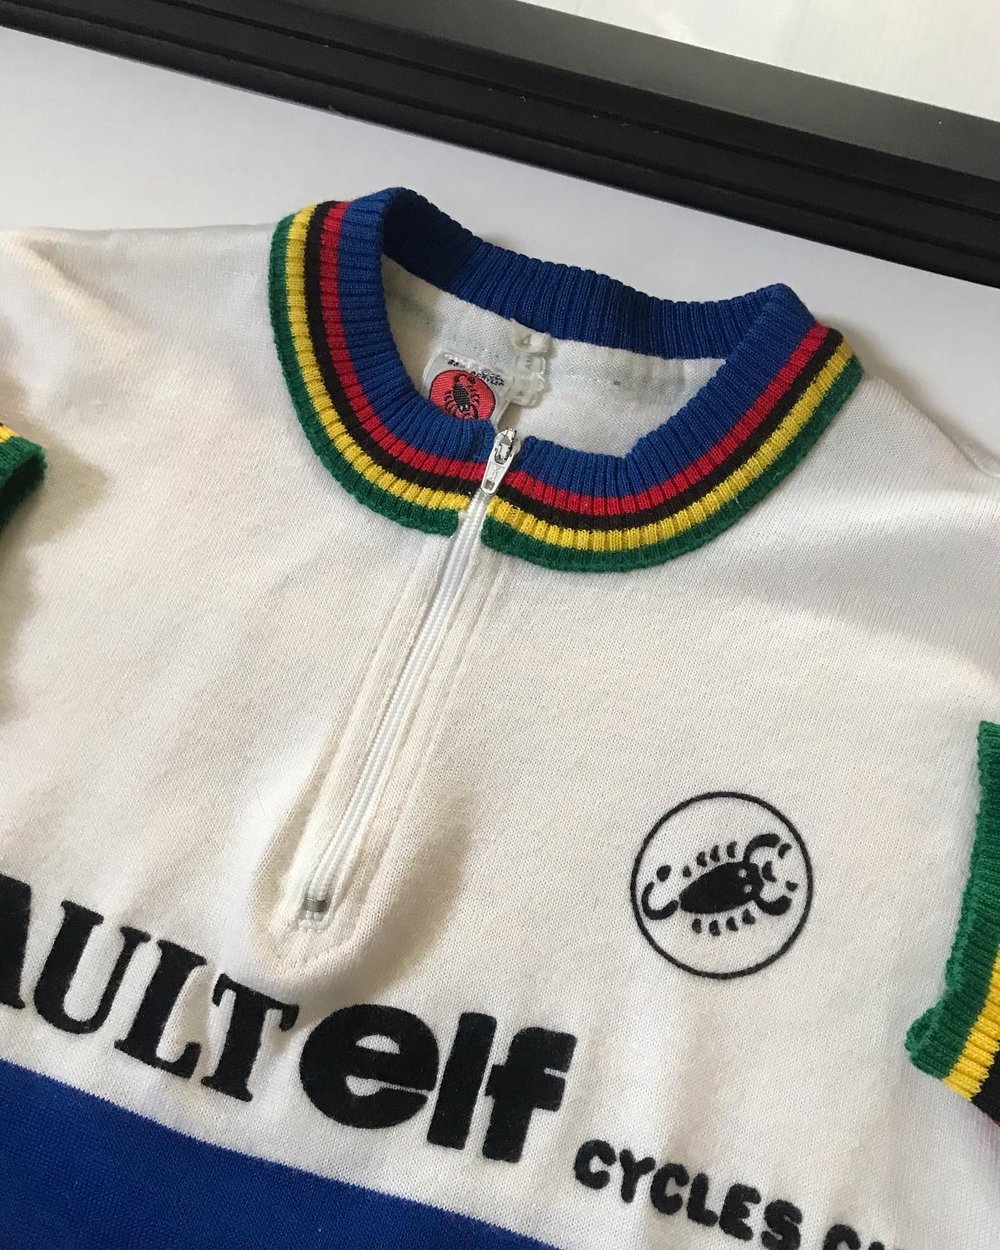 1983 ðŸ‡ºðŸ‡¸ Replica jersey for Greg Lemond - Road World Champion winner in 1983